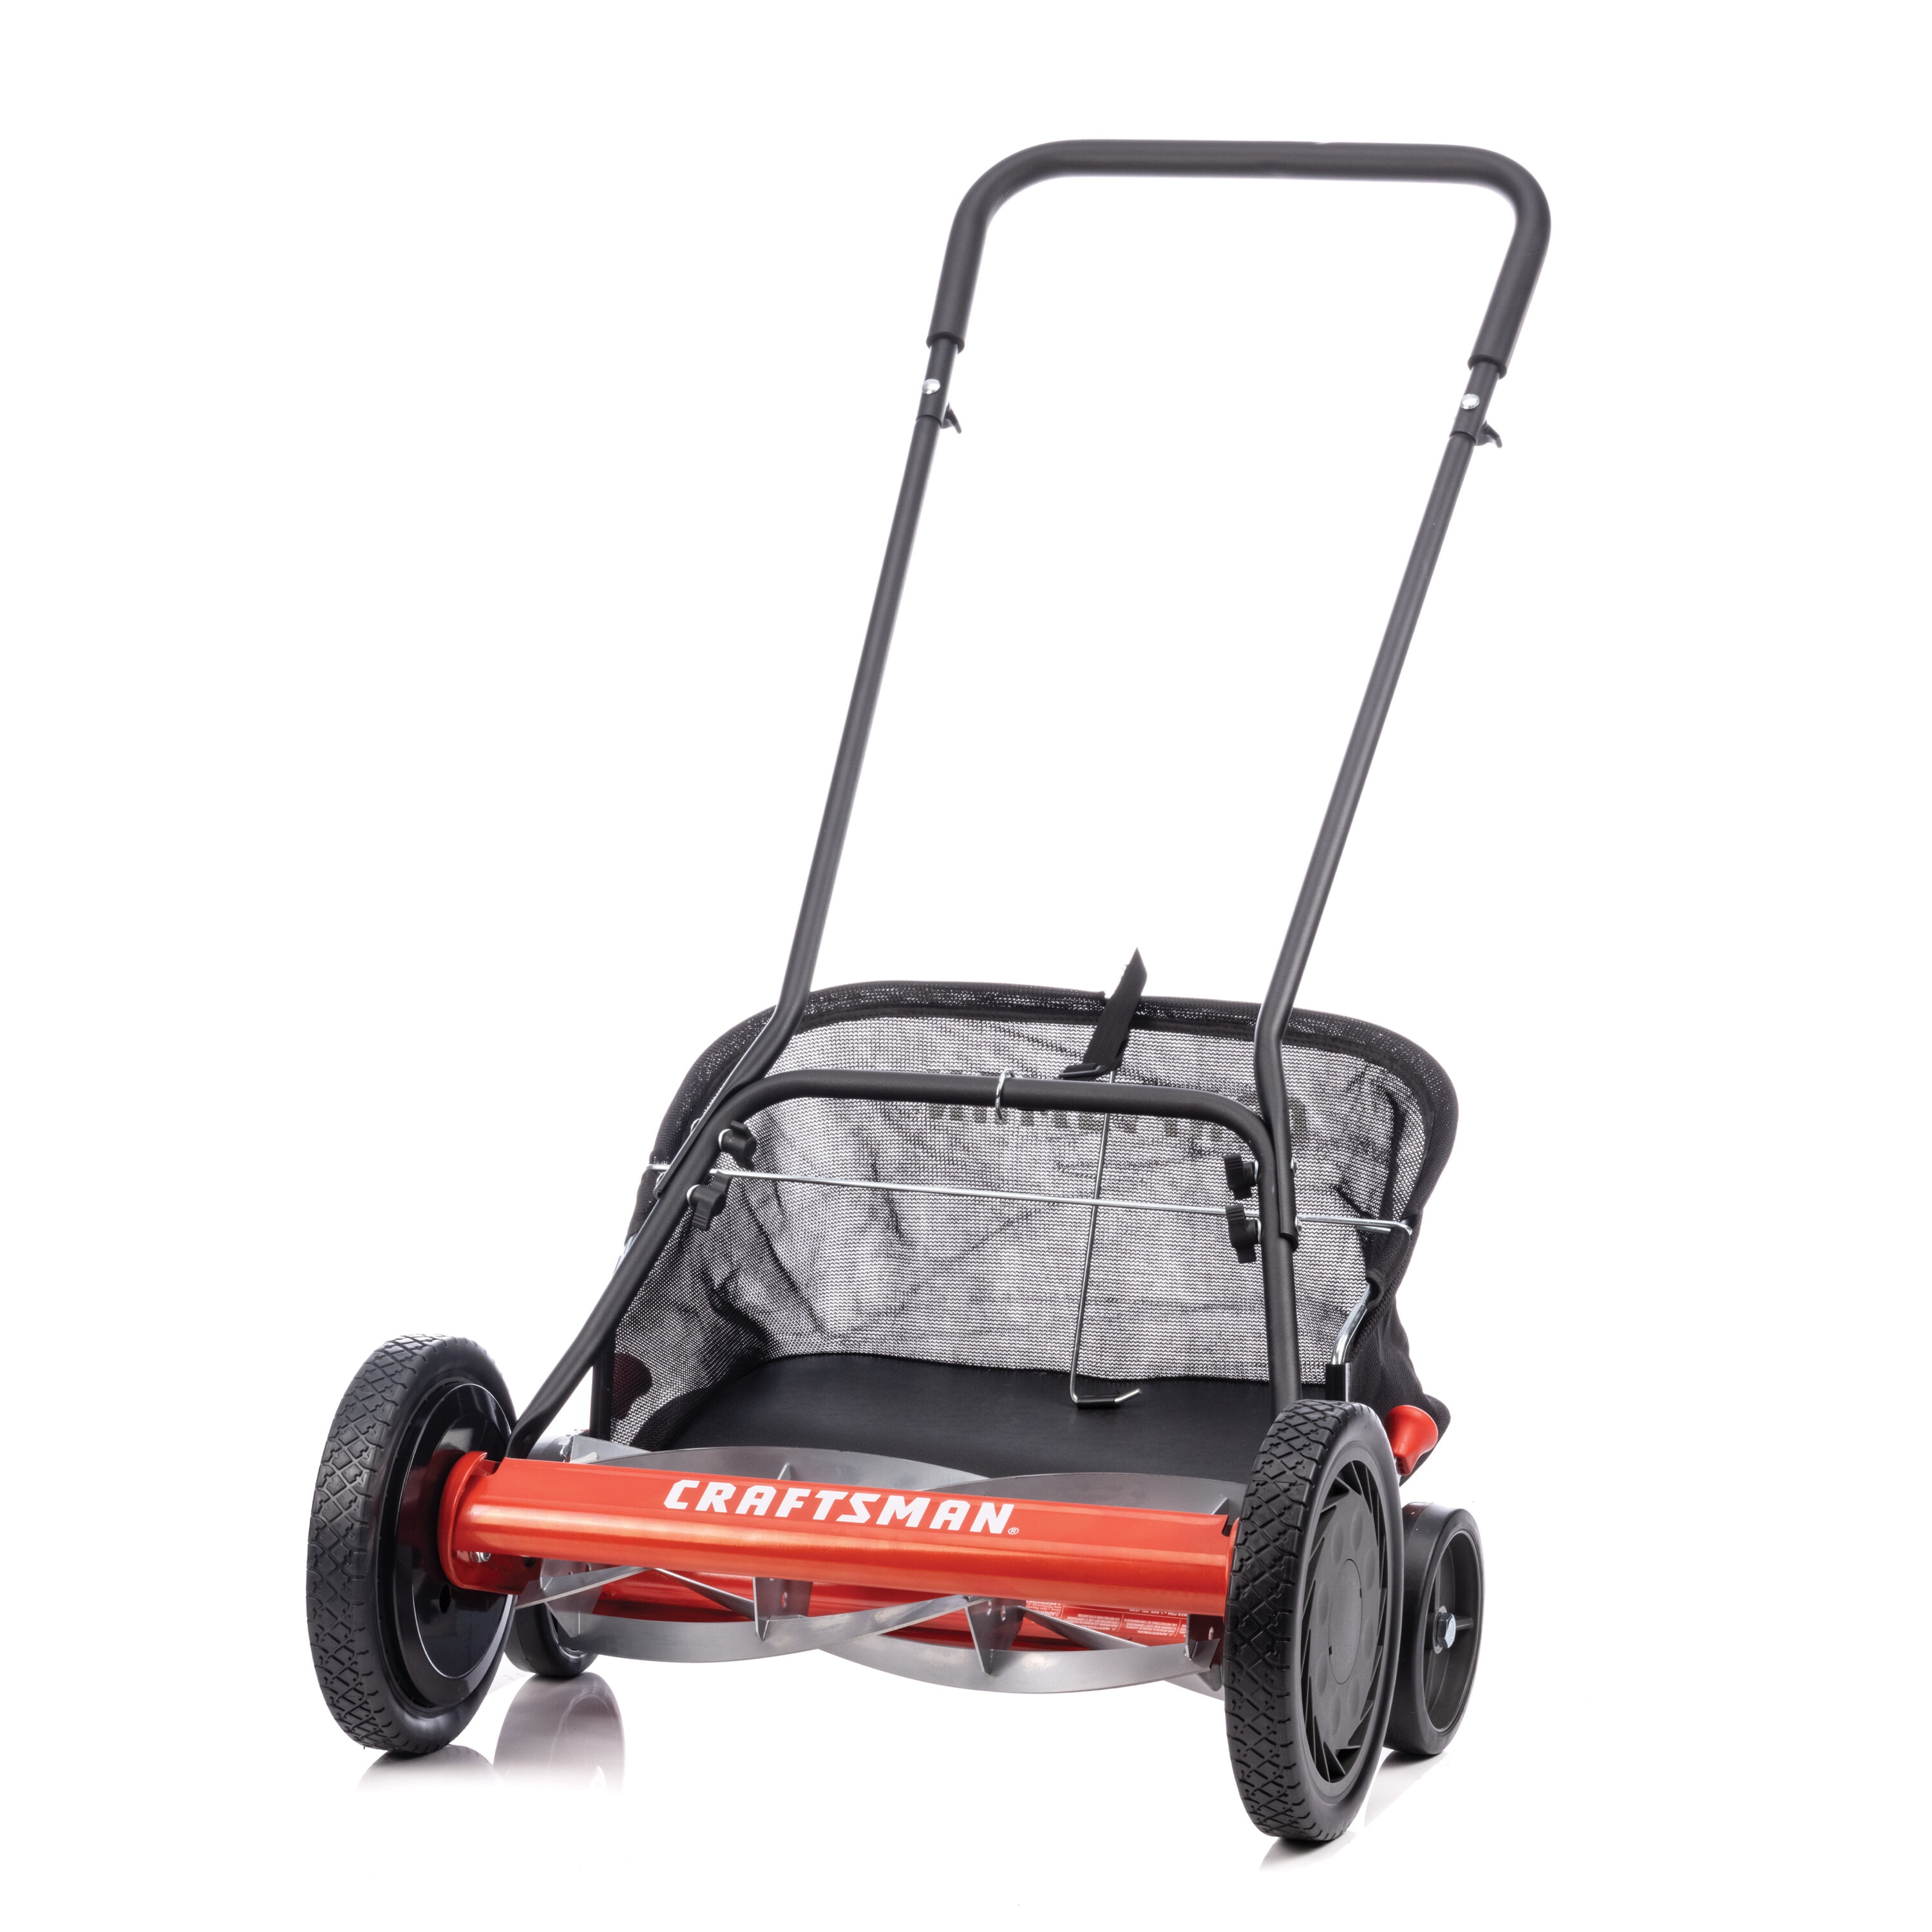 CRAFTSMAN 18-Inch 5-Blade Reel Lawn Mower with Bagger, Adjustable